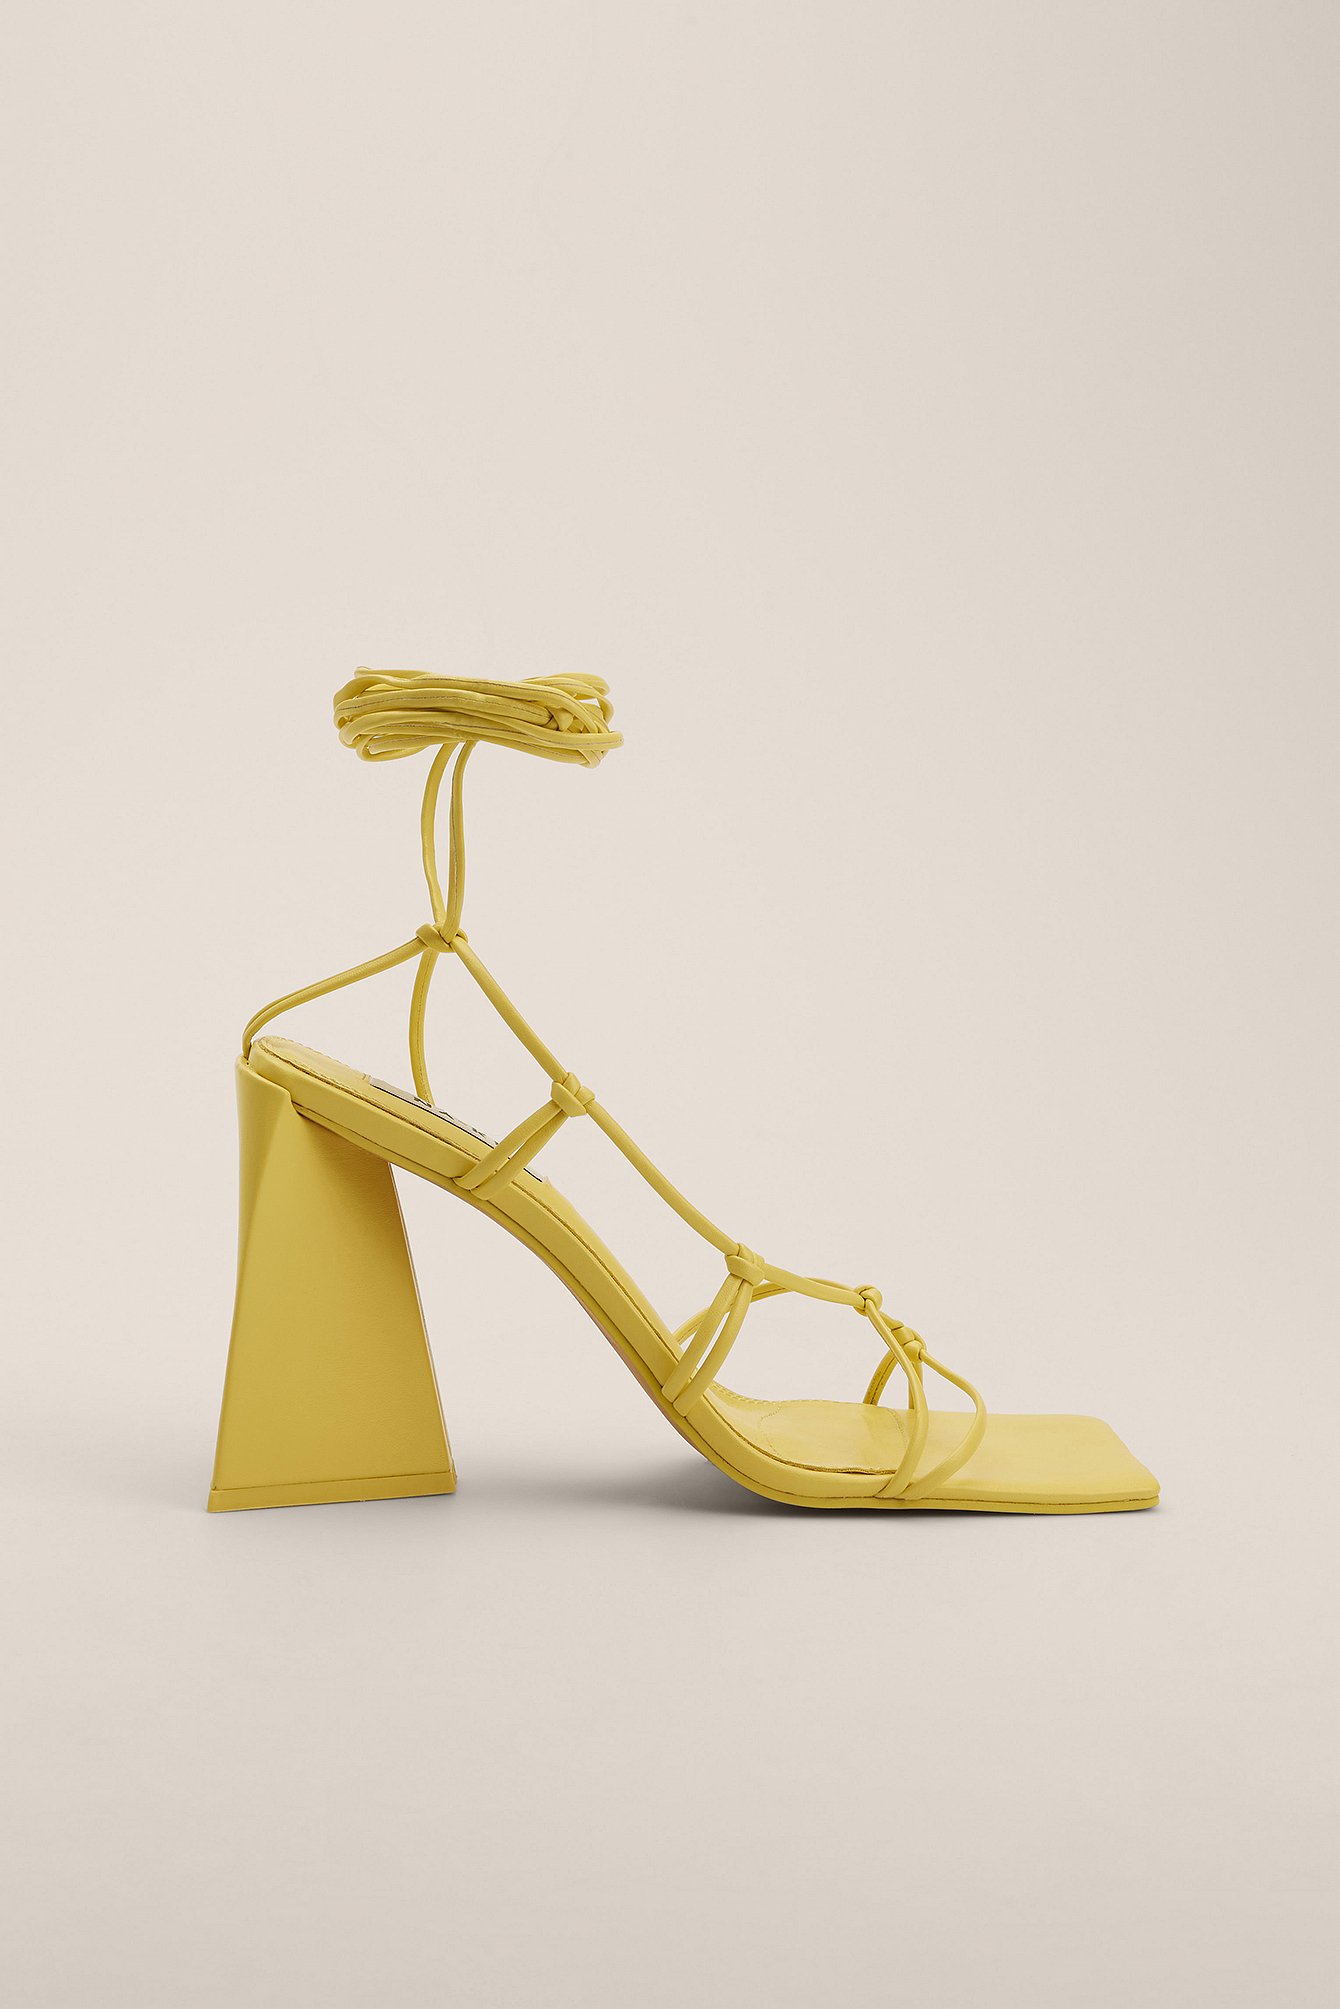 Aelia Greek Sandals - Details: Bright Yellow Suede Leather Soft Sole Wedge  handmade espadrilles 5,5 cm #handmadeshoes #greekdesigners  #aeliagreeksandals | Facebook